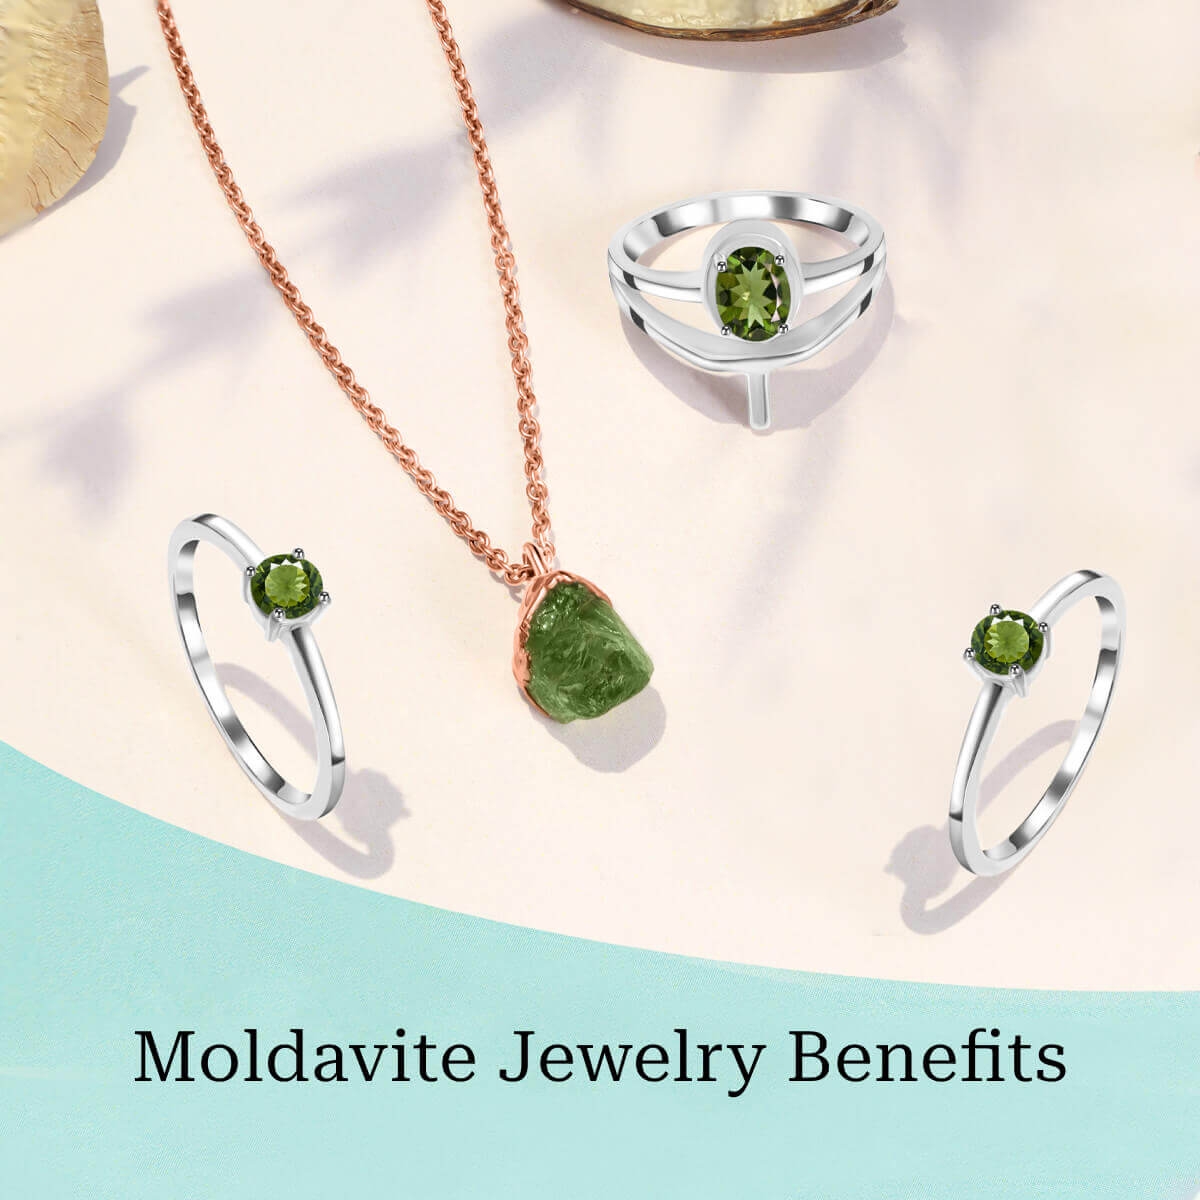 Benefits Of Wearing Moldavite Jewelry